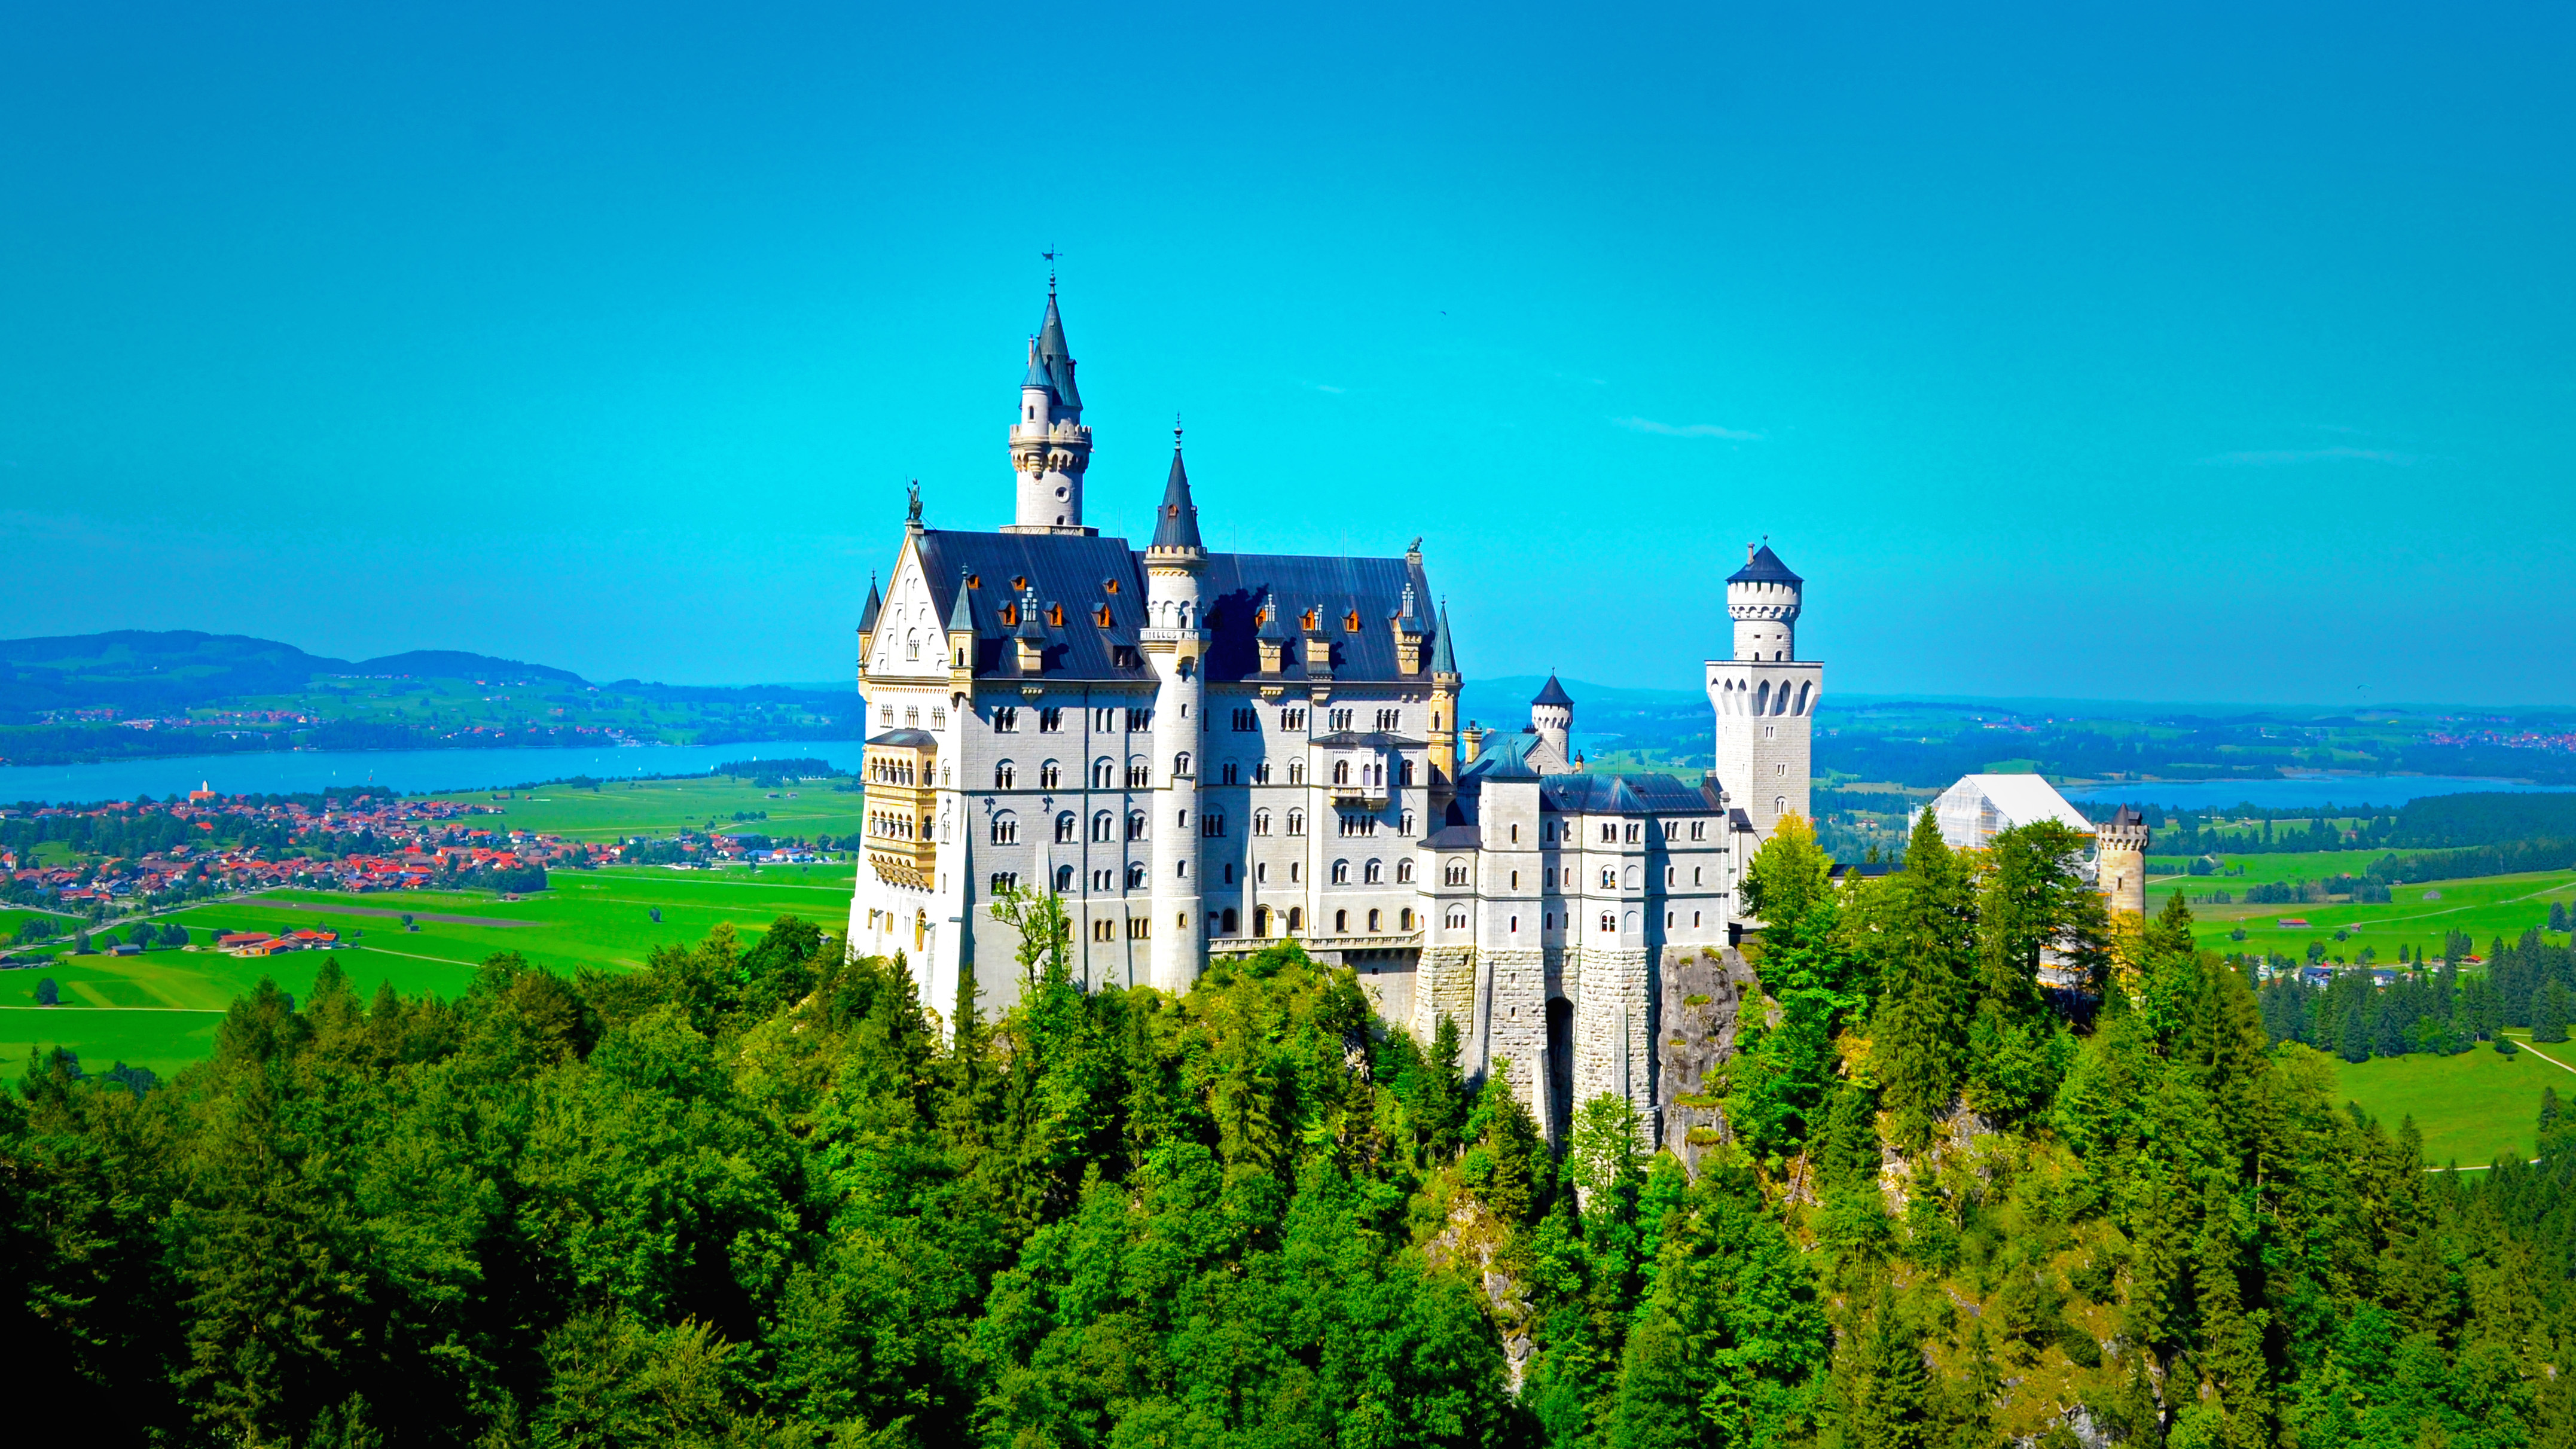 File:Neuschwanstein Castle - Bavaria.jpg - Wikimedia Commons